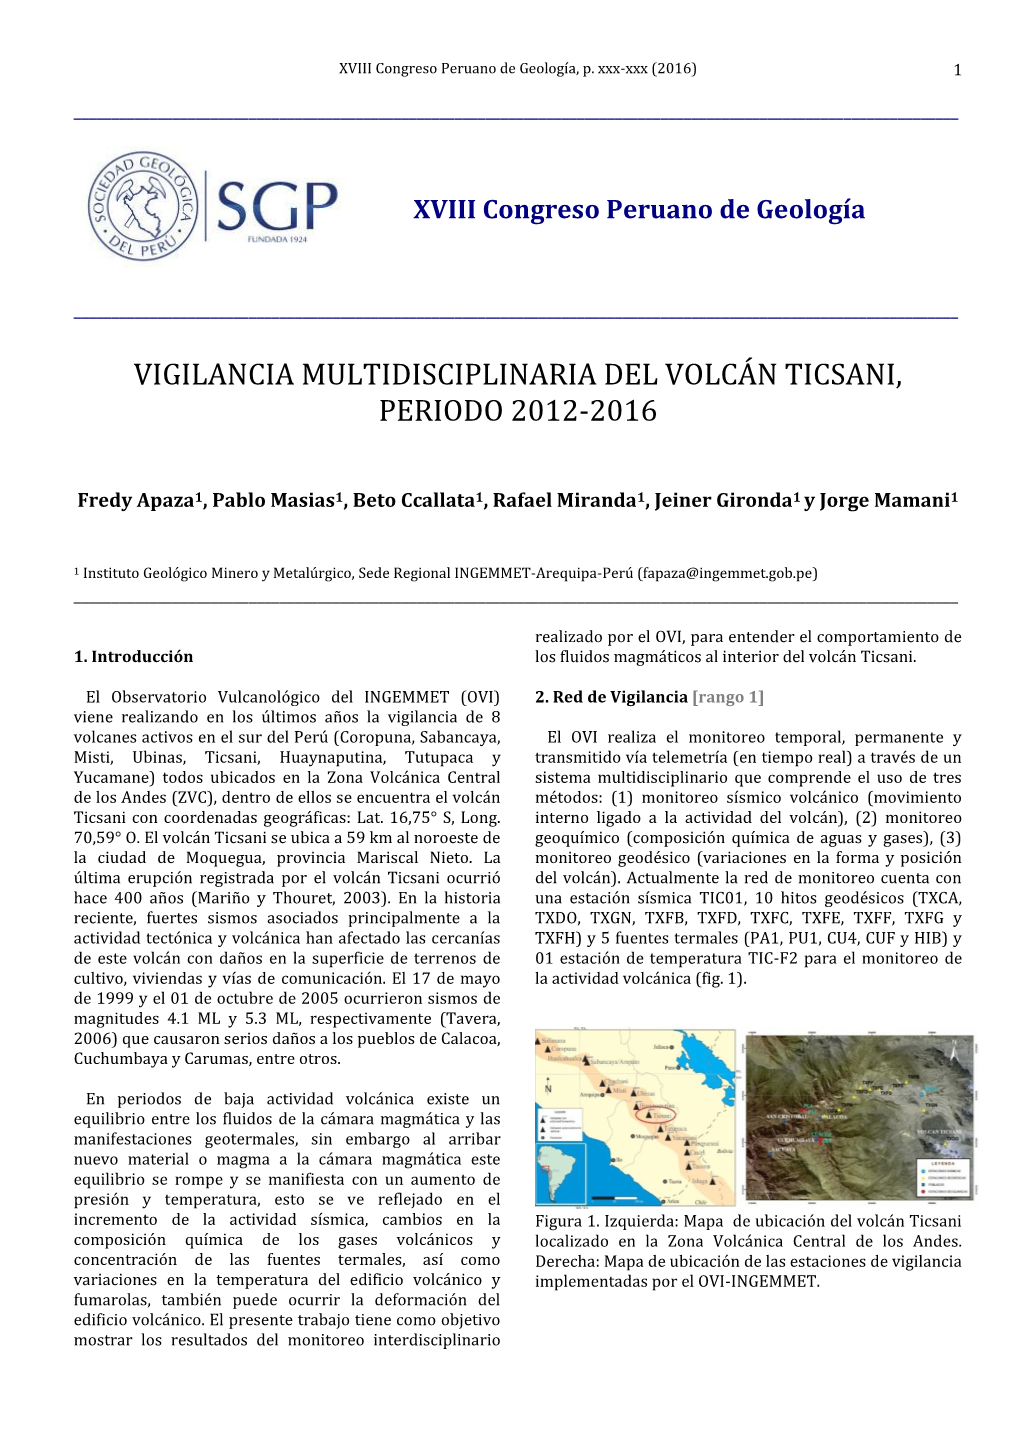 Vigilancia Multidisciplinaria Del Volcán Ticsani, Periodo 2012-2016